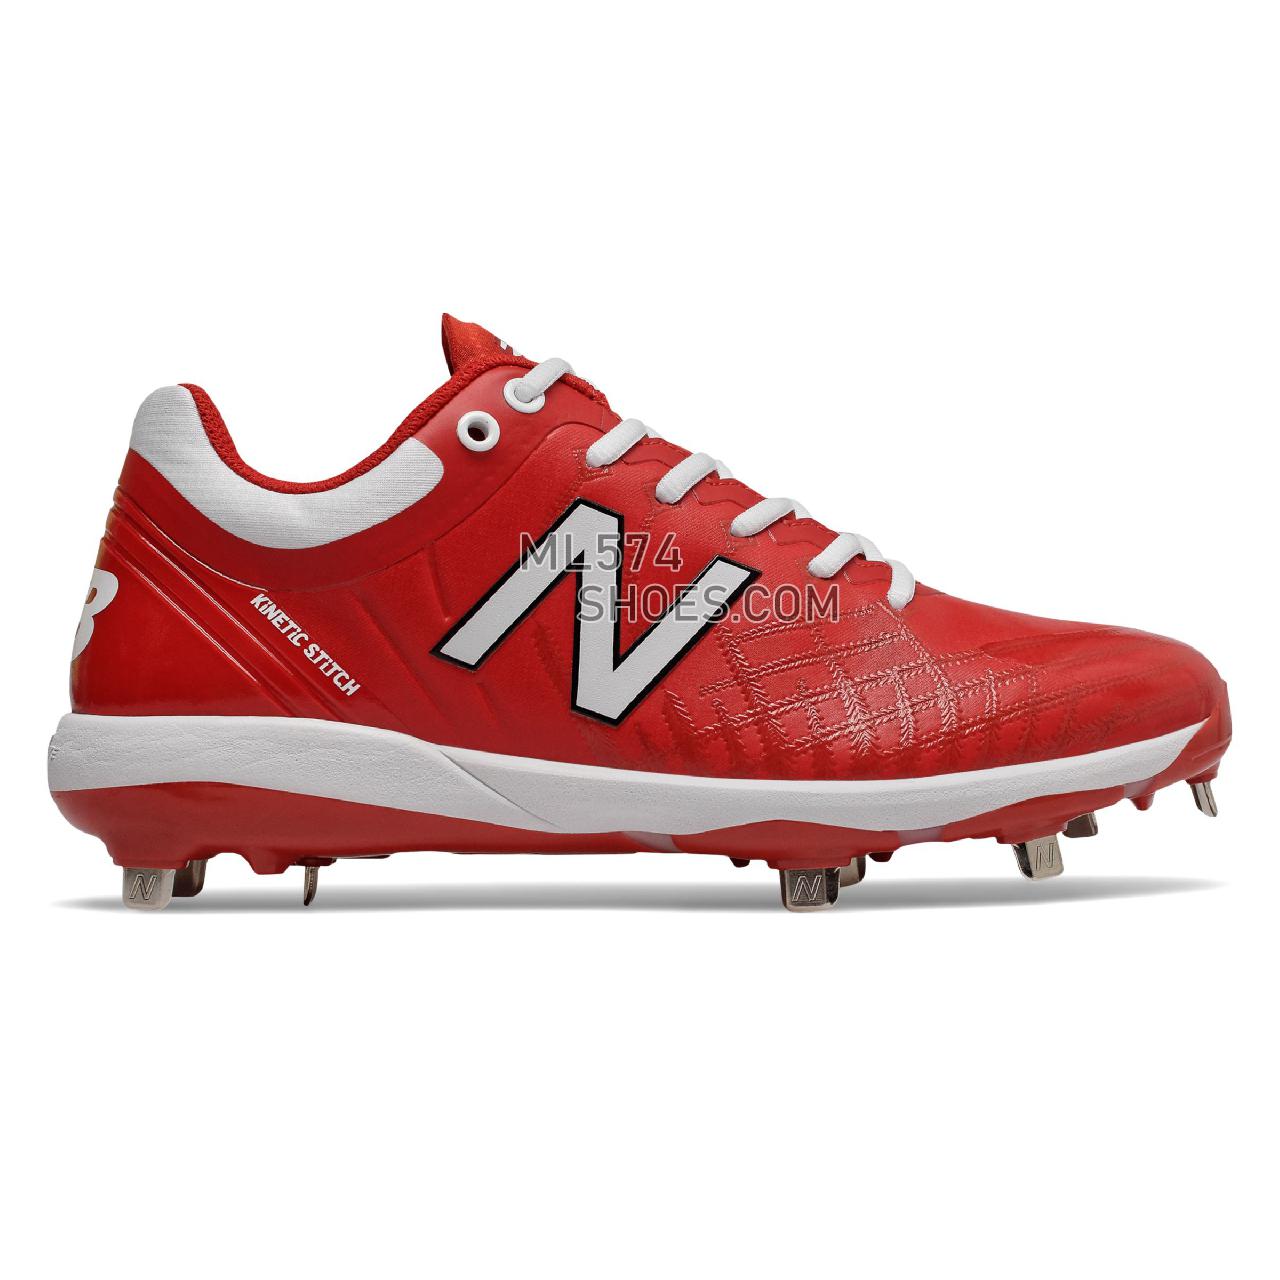 New Balance 4040v5 Metal - Men's Baseball Turf - Red with White - L4040TR5